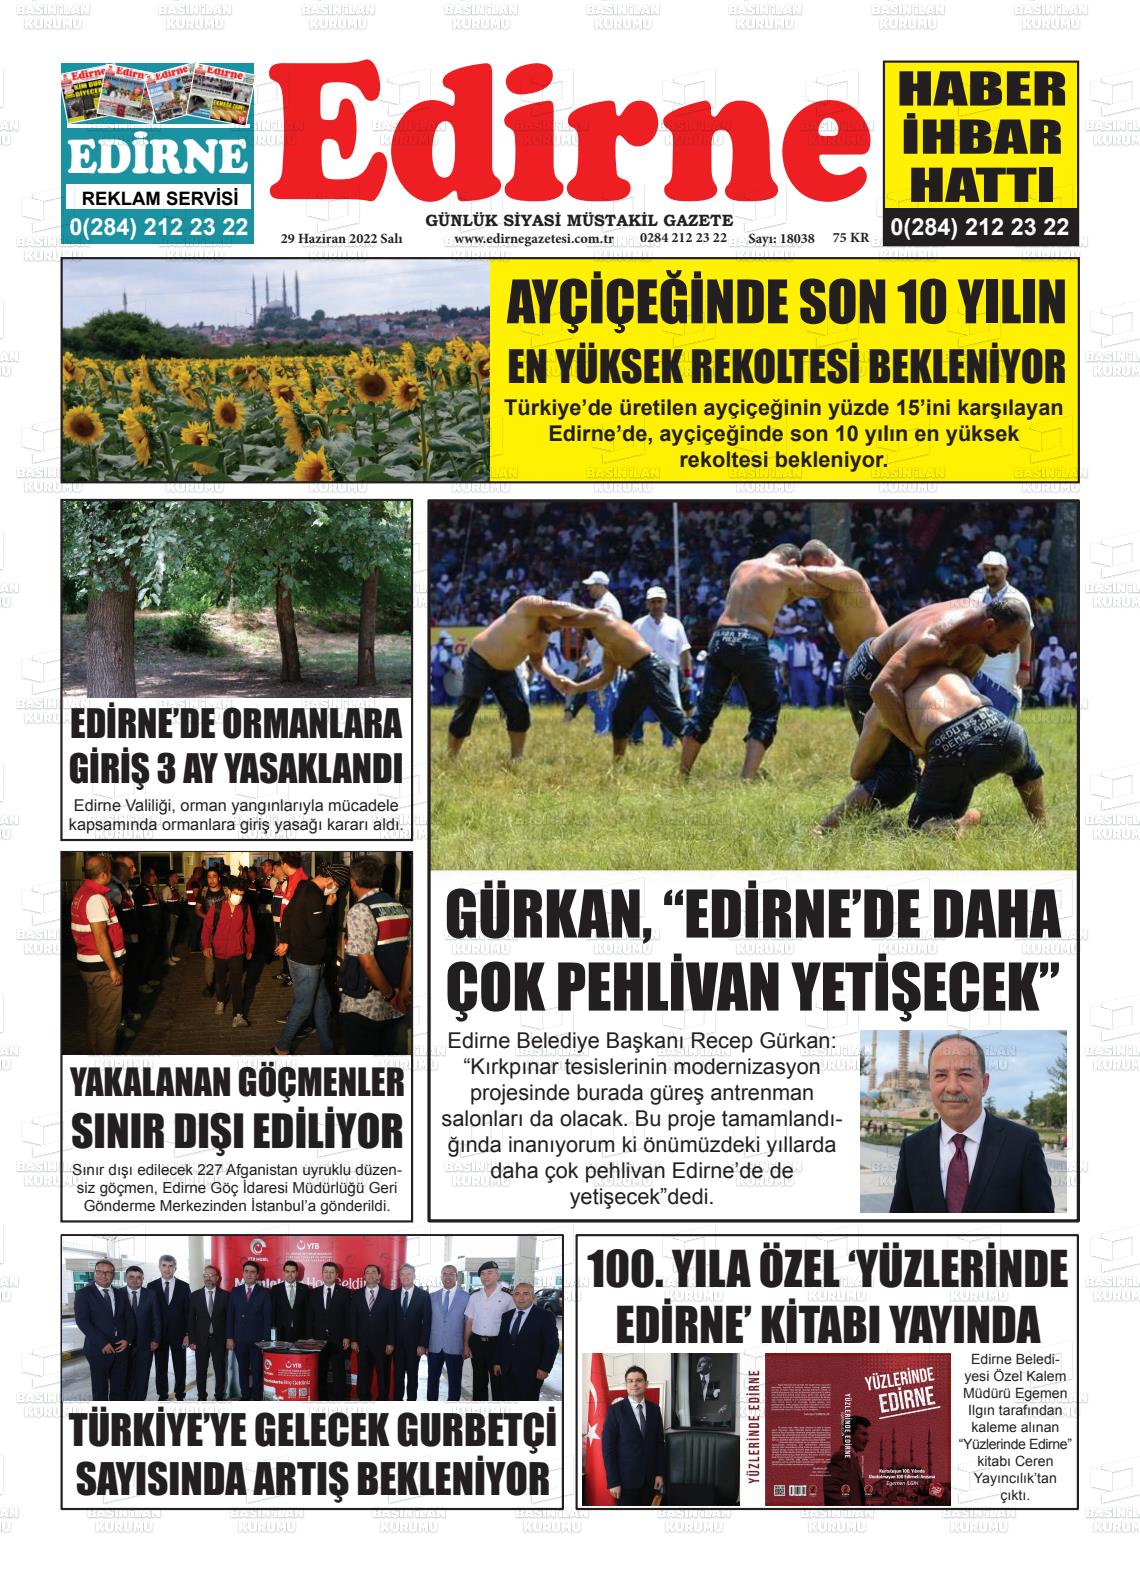 29 Haziran 2022 Edirne Gazete Manşeti